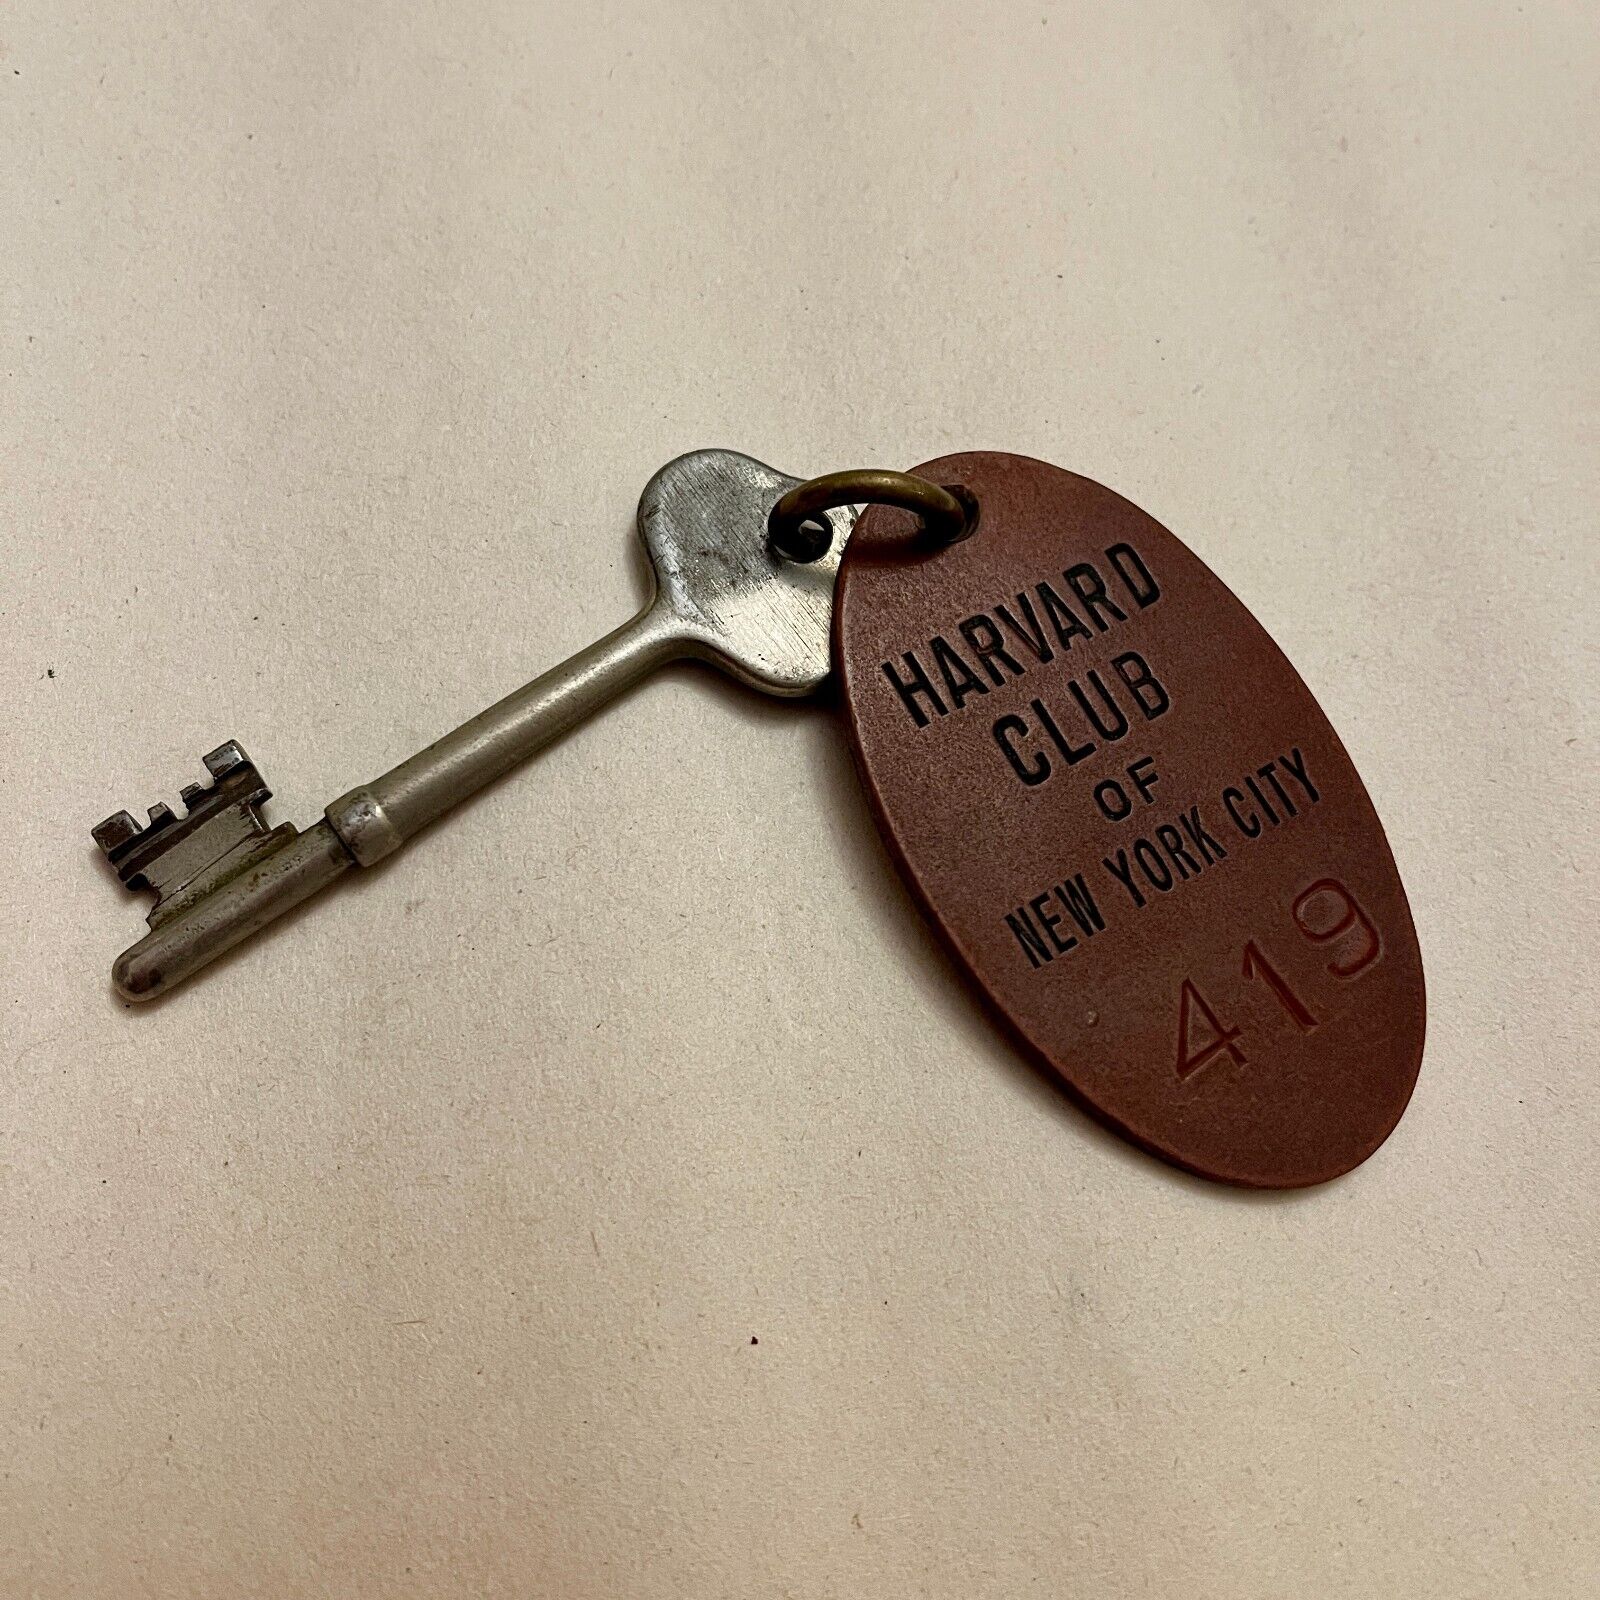 Very *RARE* Harvard Club of New York Vintage Room Key and Leather Fob, Room 419